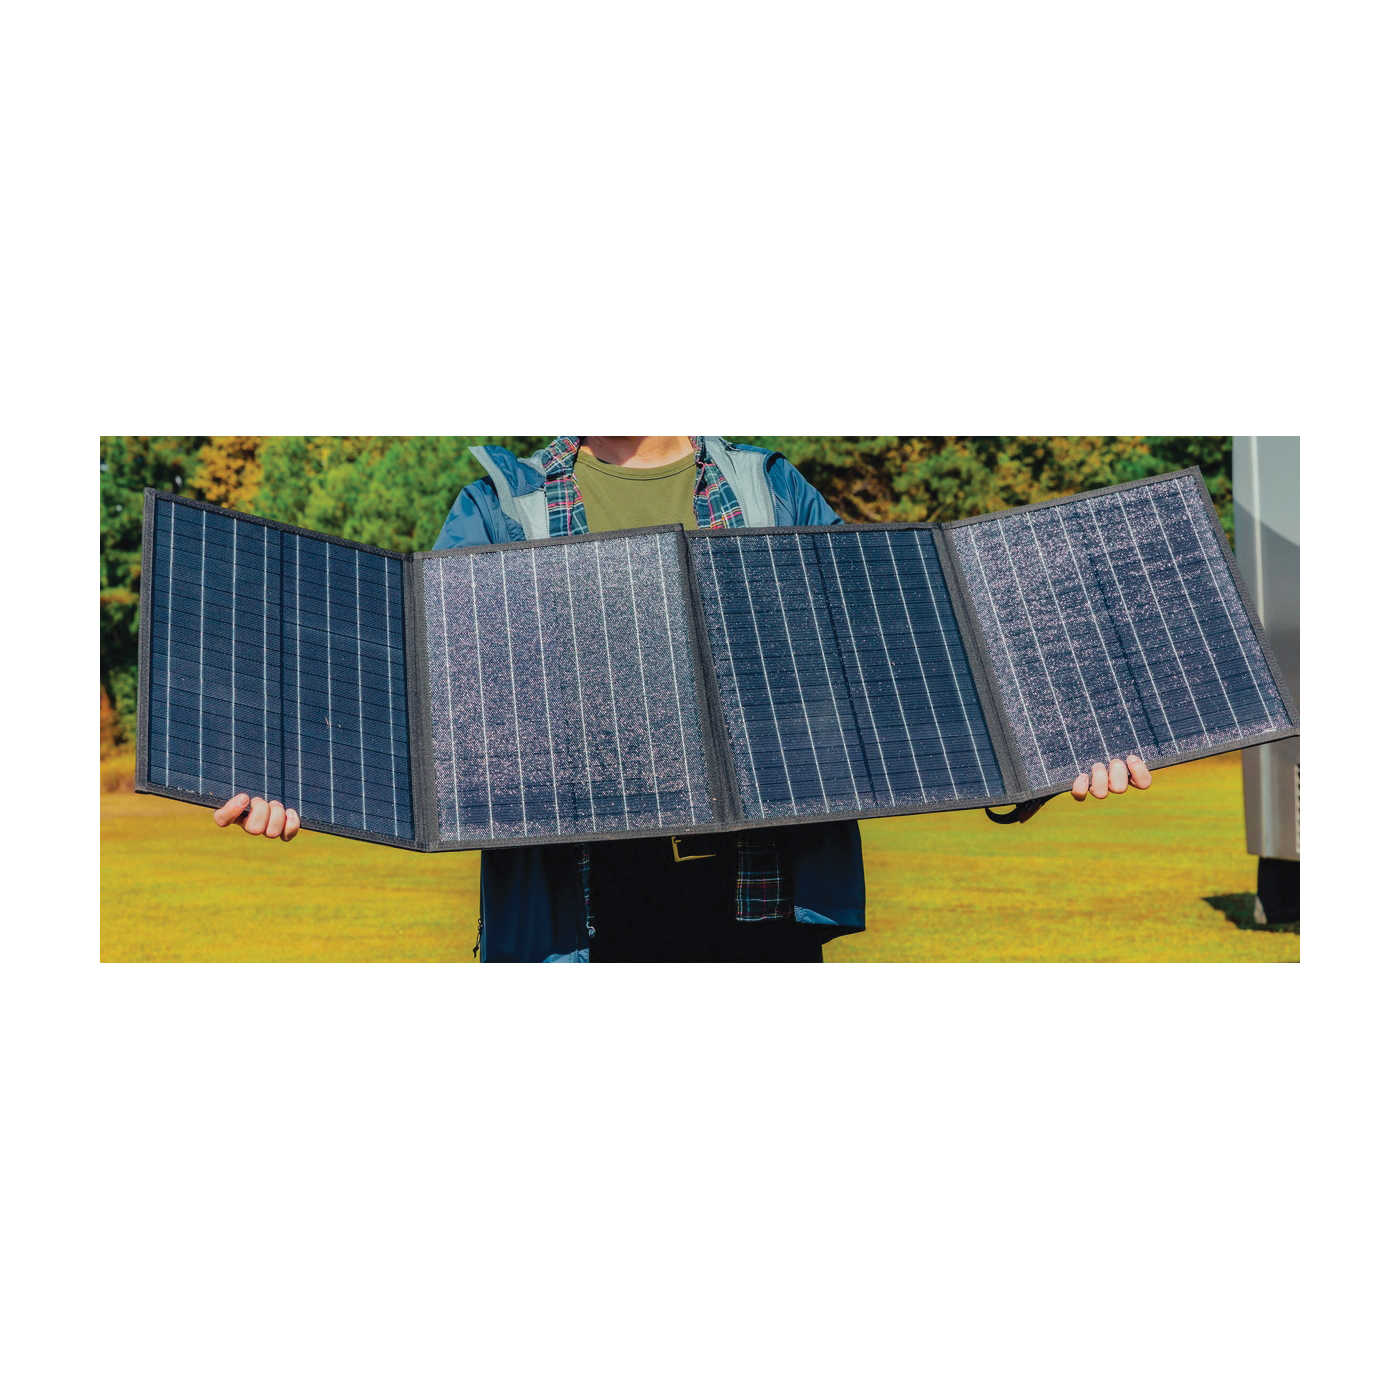 Southwire Elite Series 53224 Monocrystalline Portable Solar Panel, 100 W, 18 V, ETFE - 2